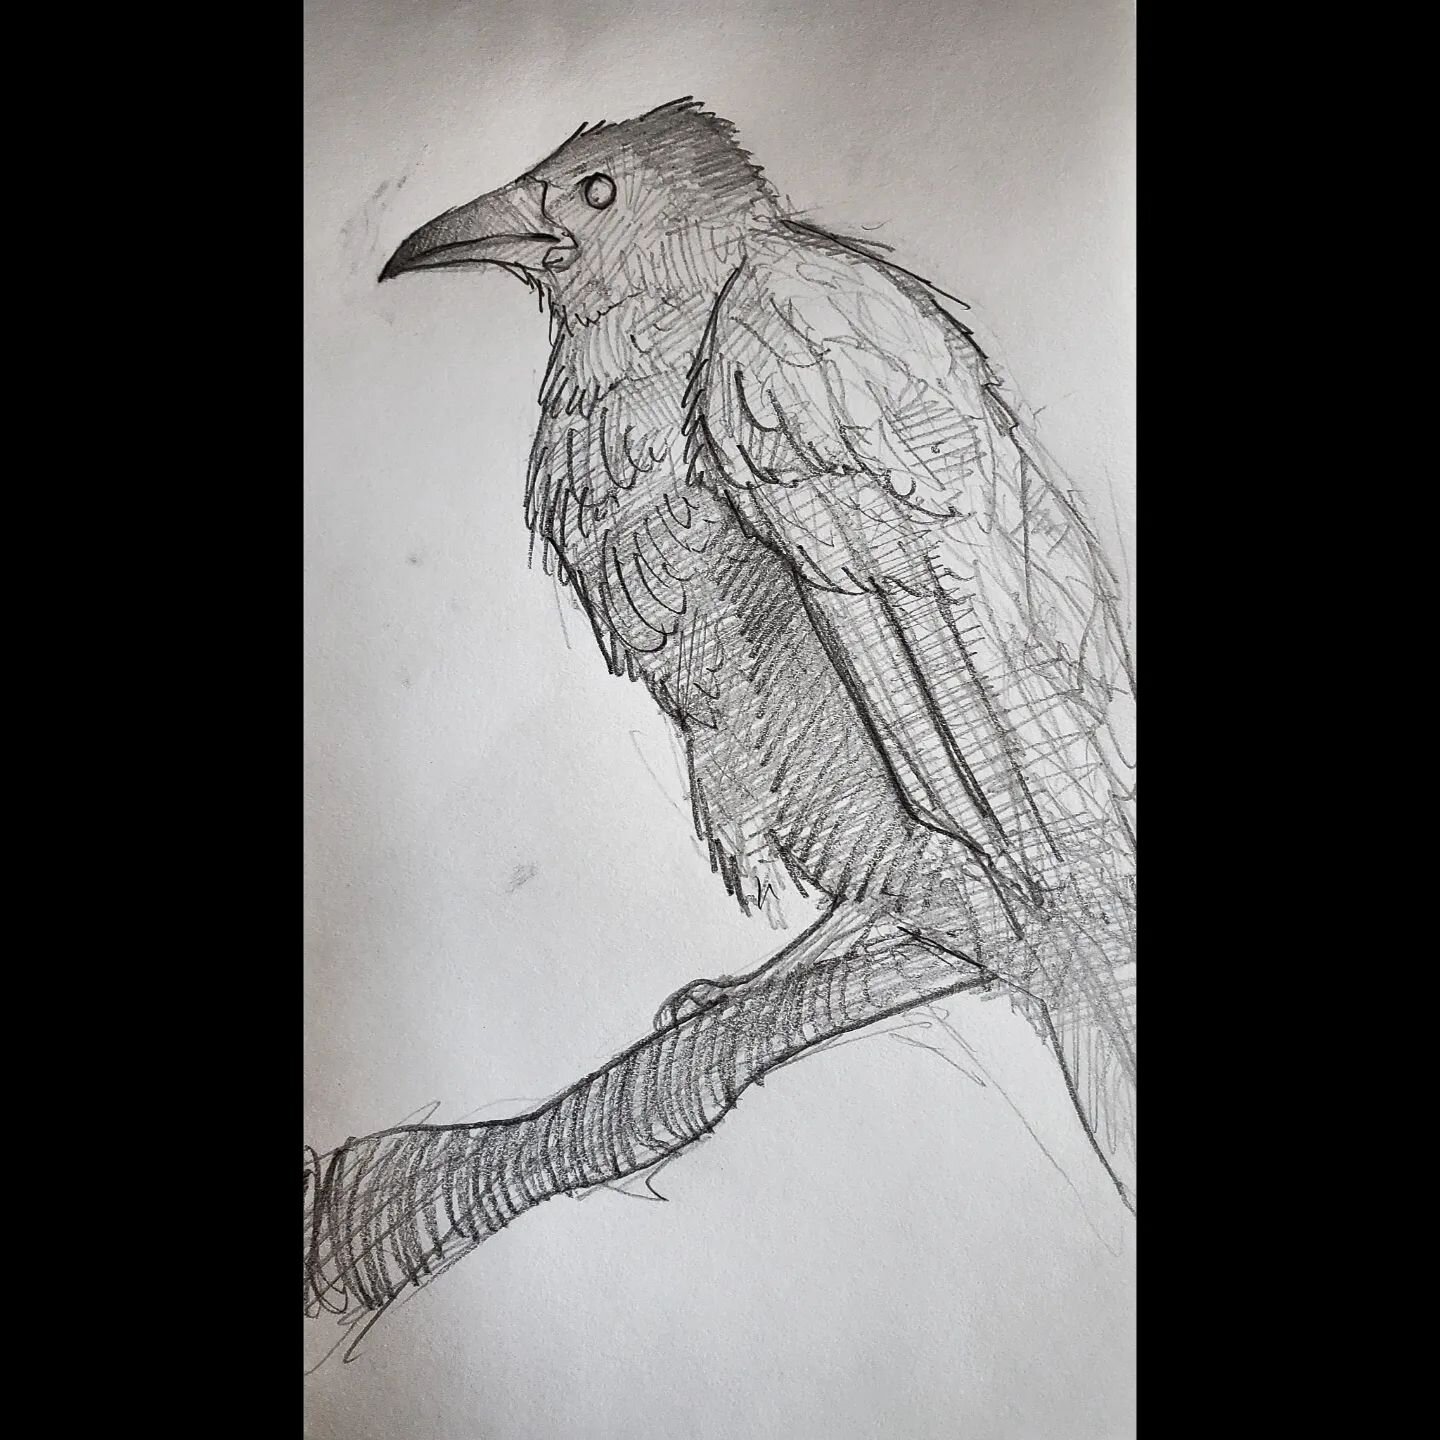 Crow Study
.
.
.
#cameronbyeart #sketchbook #sketch #animal #crow #raven #pencil #art #artstudy